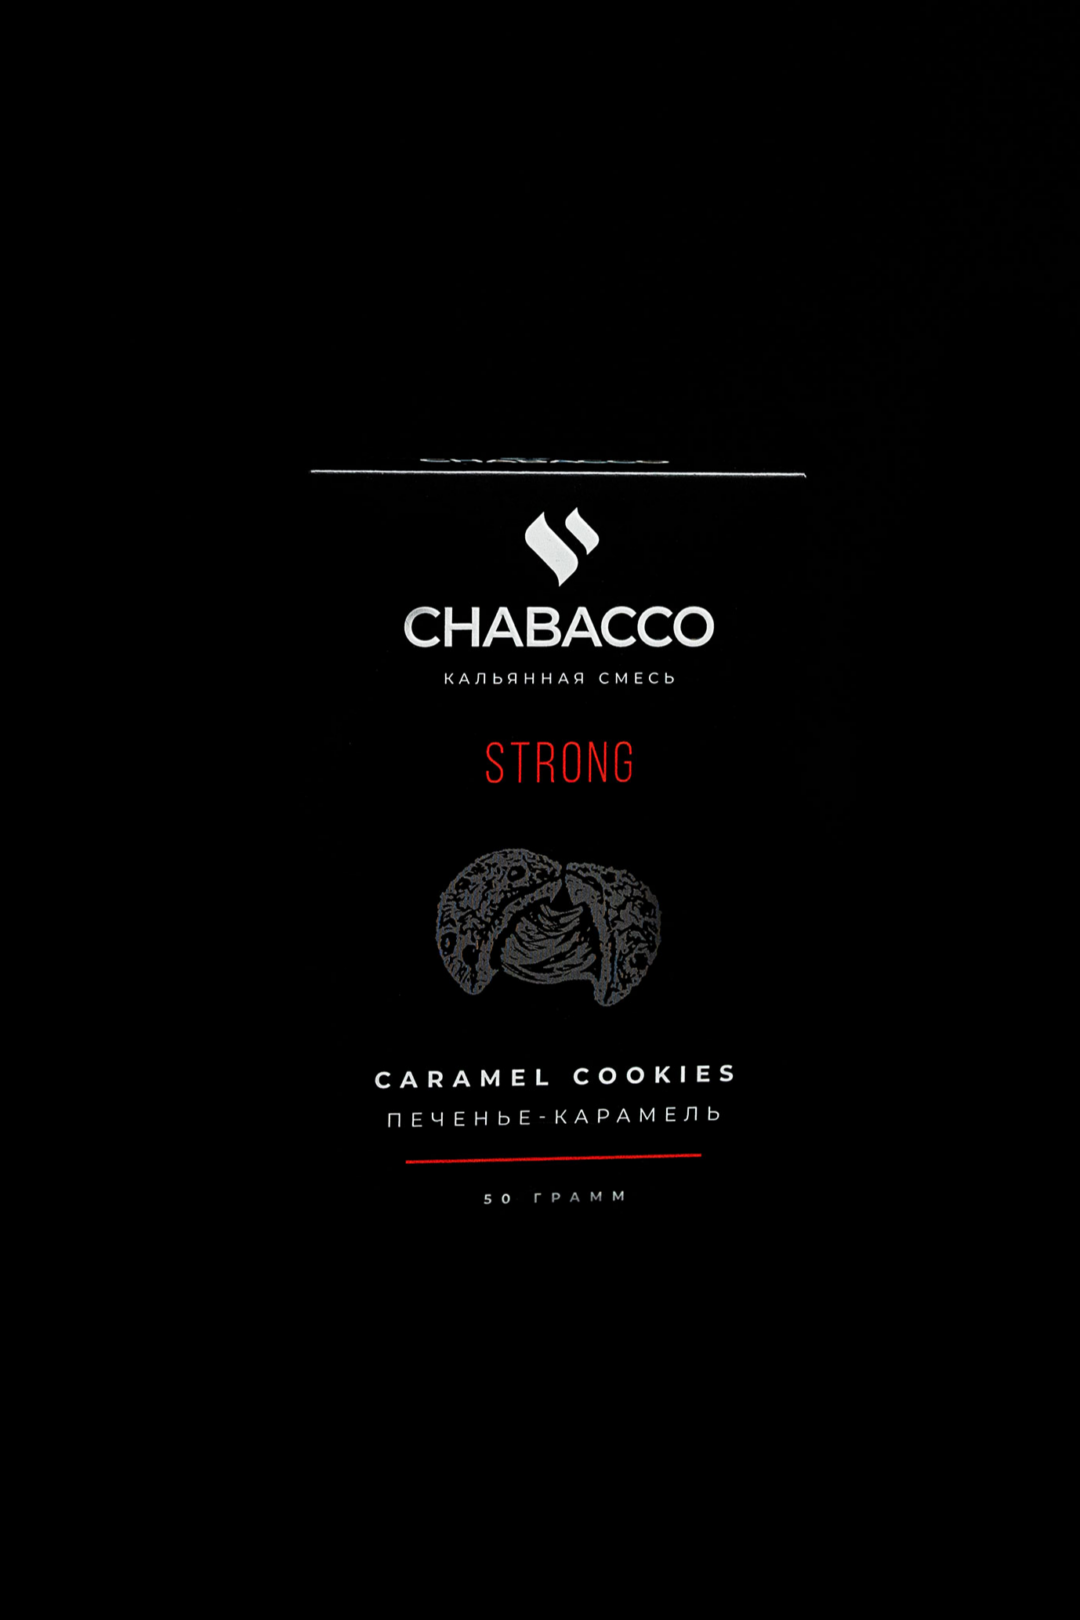 Chabacco Strong CARAMEL COOKIES ( Karamel, peçenye )